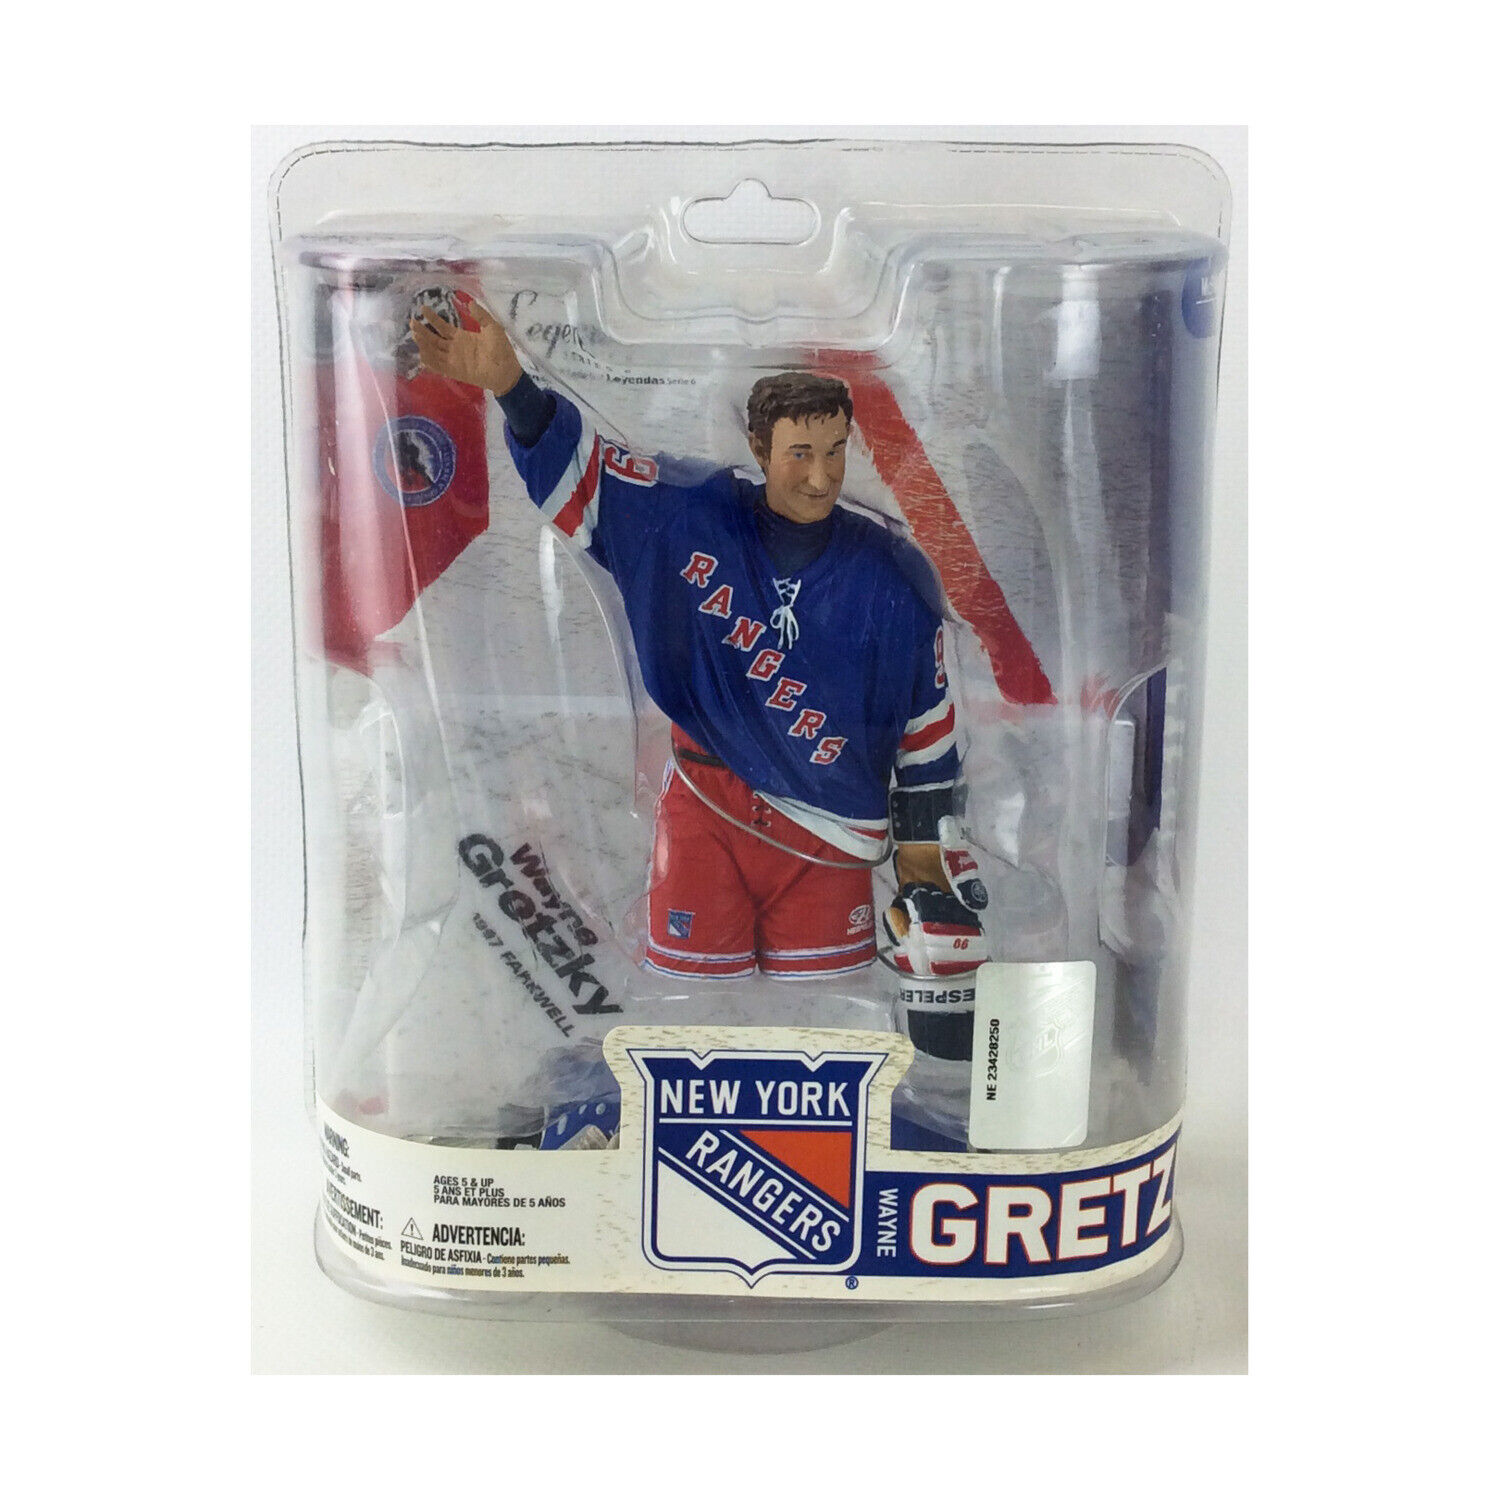 McFarlane Toys Action Figure Wayne Gretzky (NHL Series 6) New